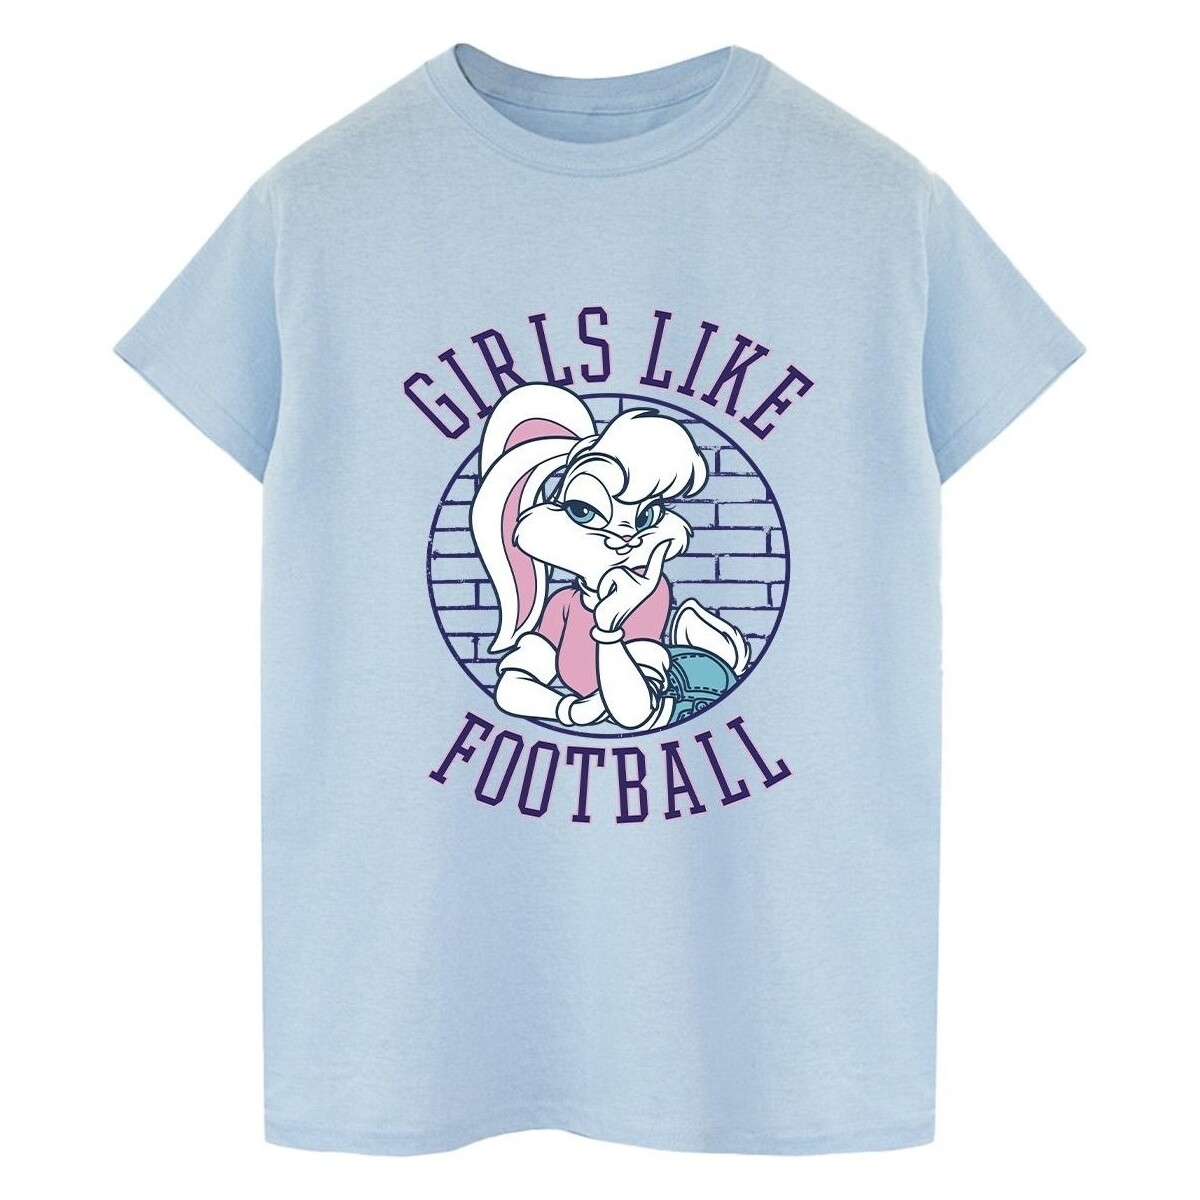 textil Hombre Camisetas manga larga Dessins Animés Lola Bunny Girls Like Football Azul